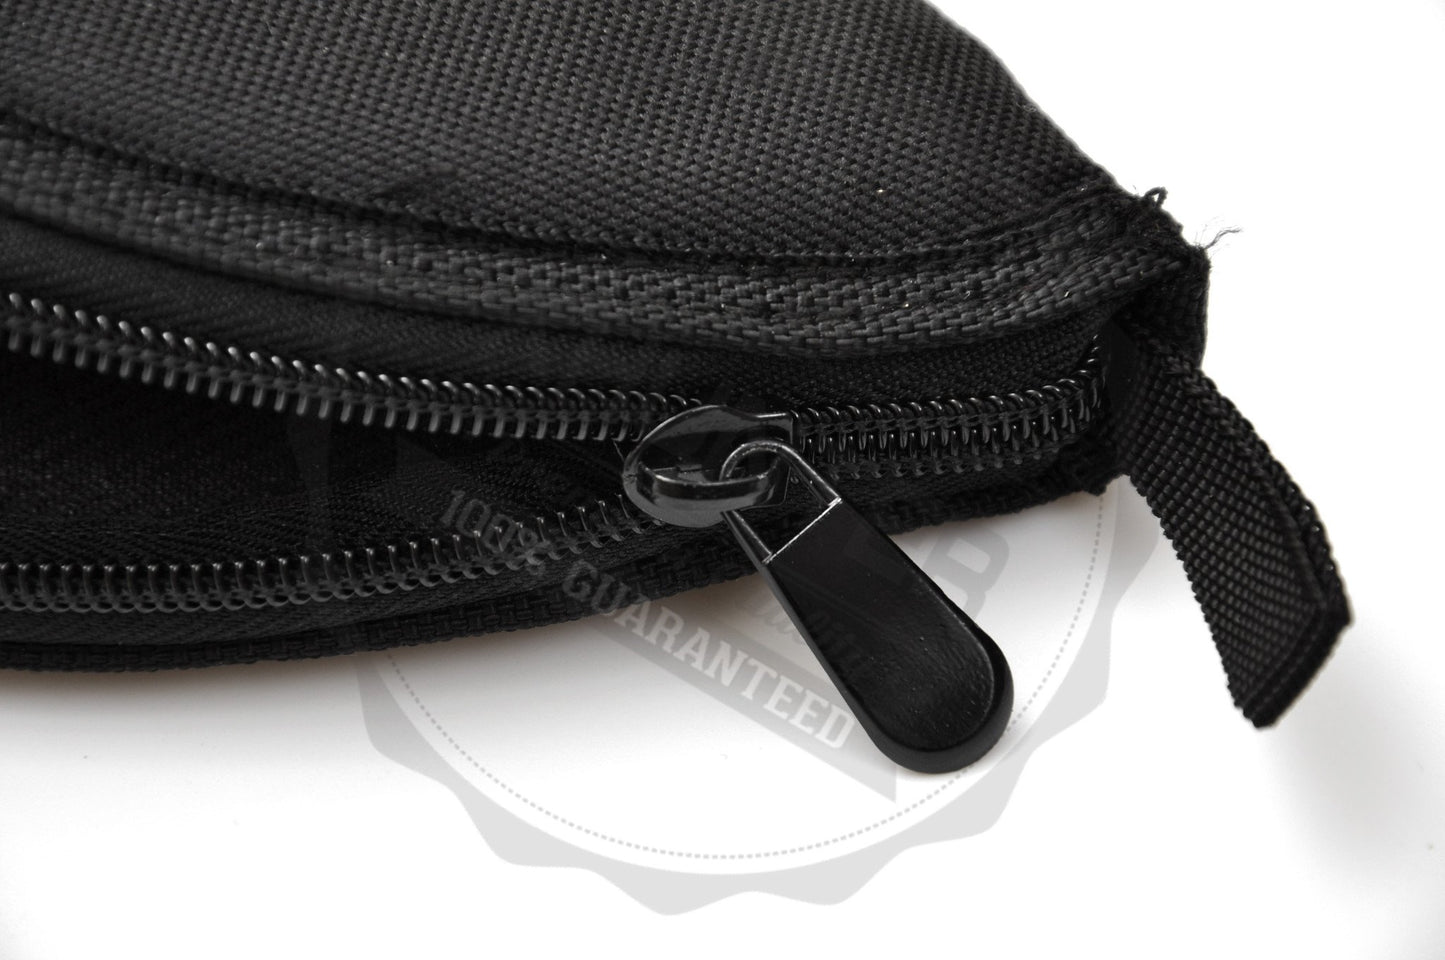 Xhunter Xhunter Pistol Bag - Black 16 Inch #00021 Black